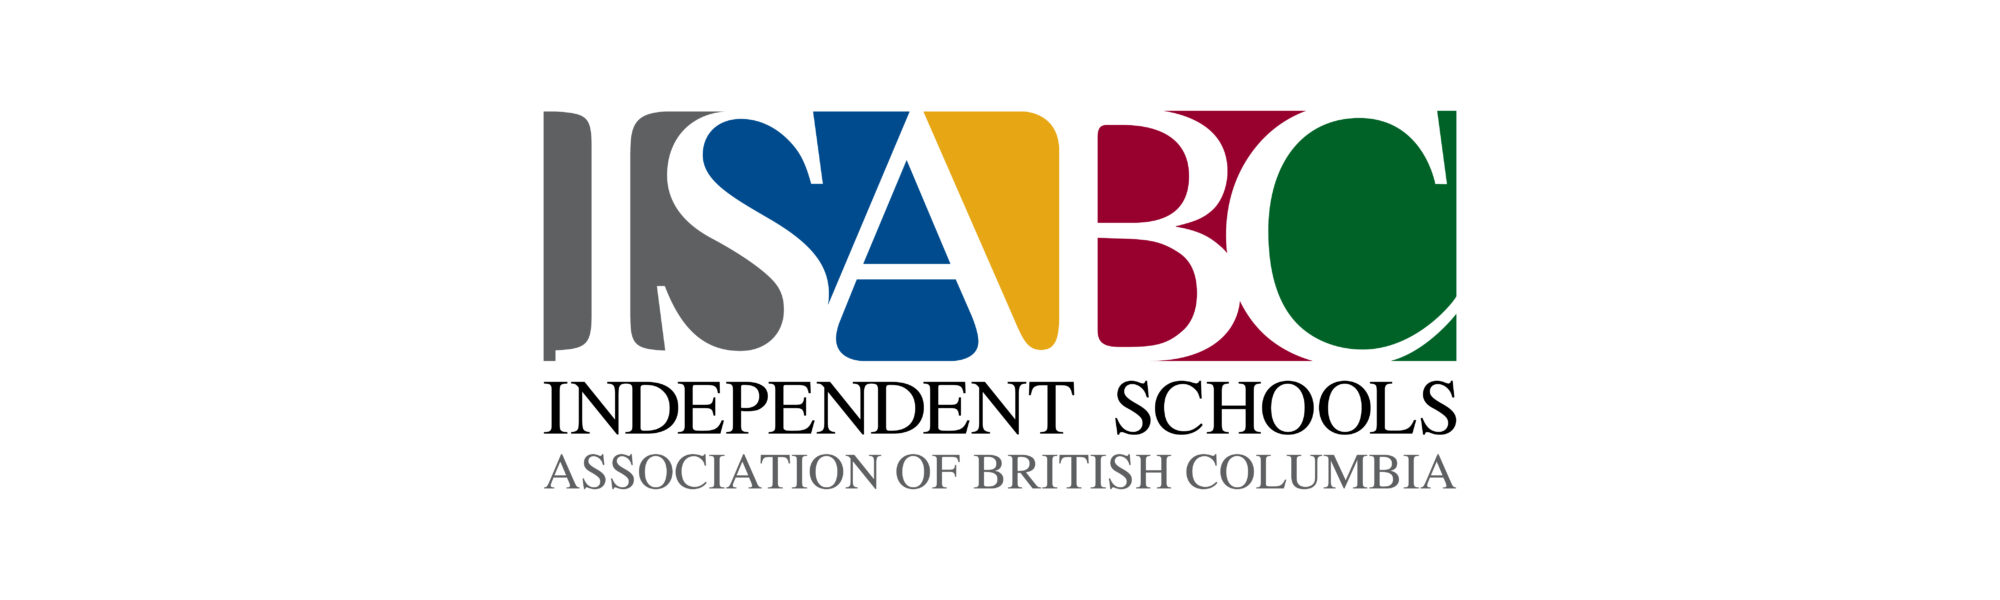 Independent Schools Association of British Columbia - Visual Identity